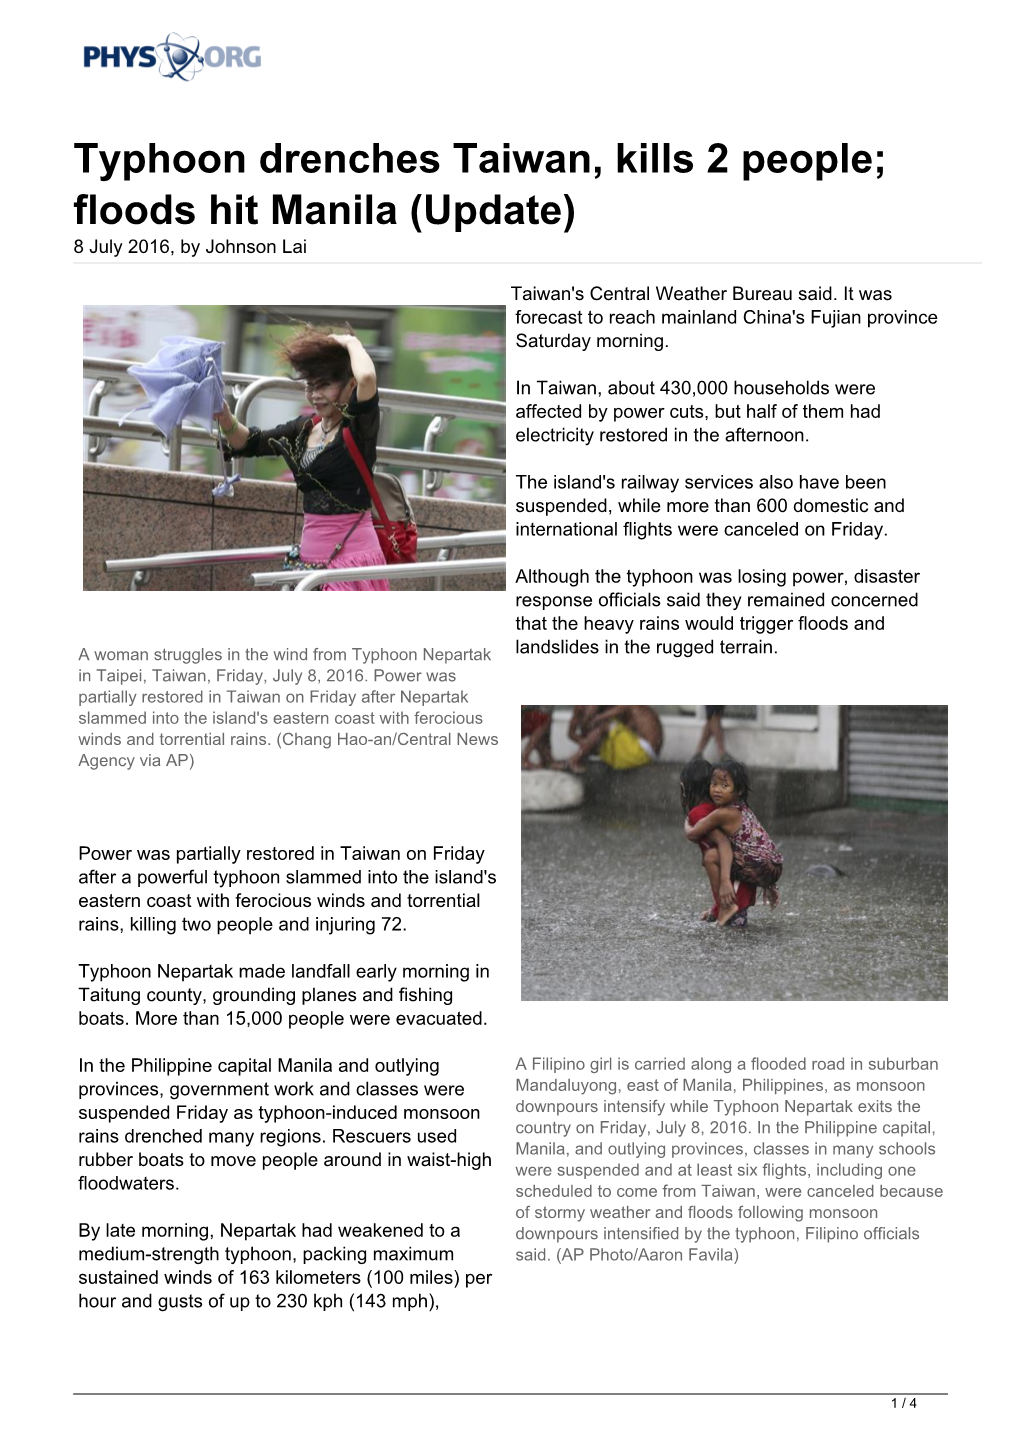 Floods Hit Manila (Update) 8 July 2016, by Johnson Lai